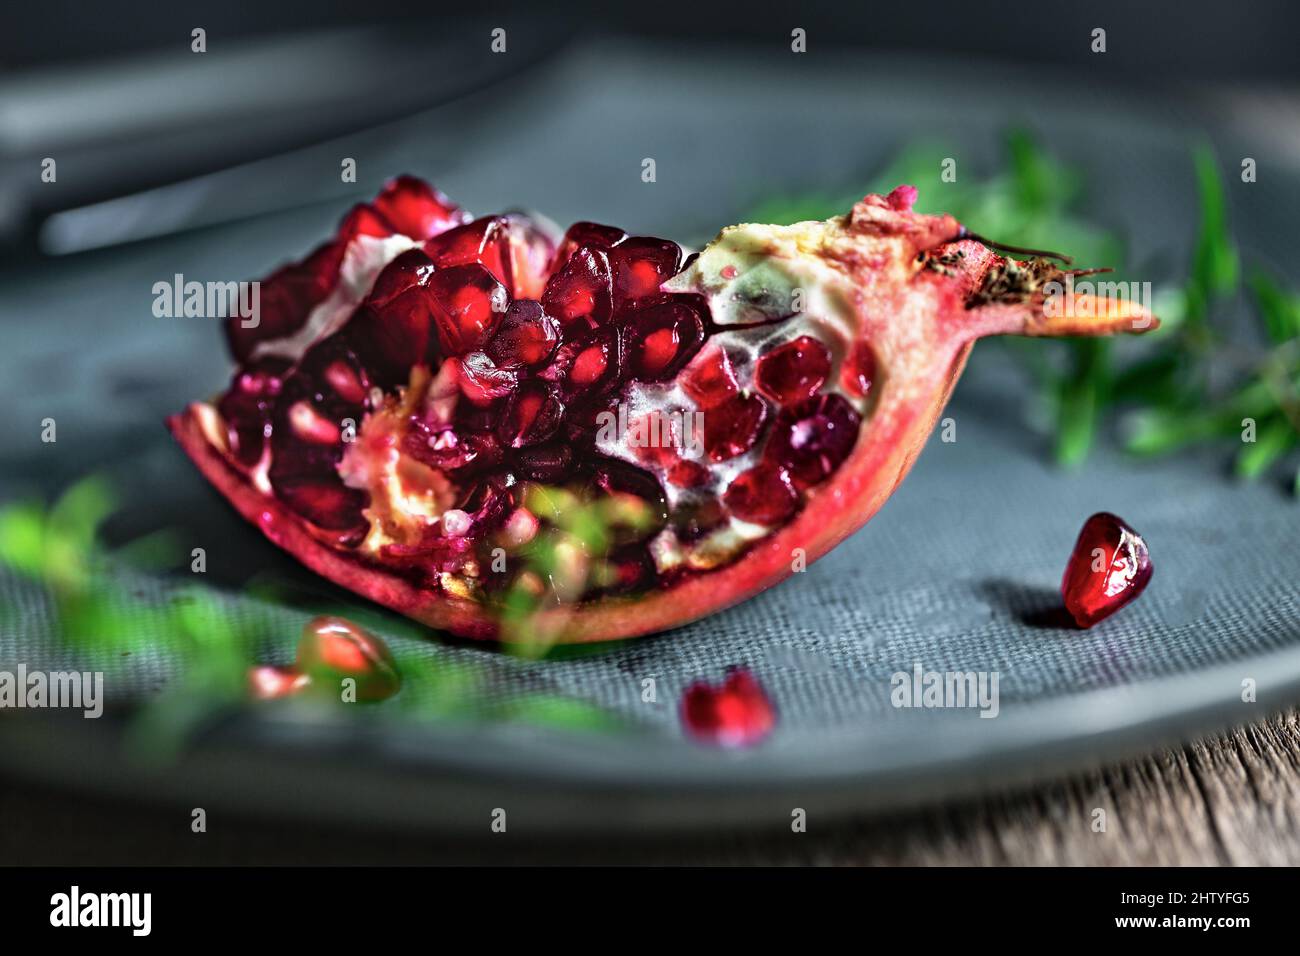 Fresh Indian Pomegranate Stock Photo